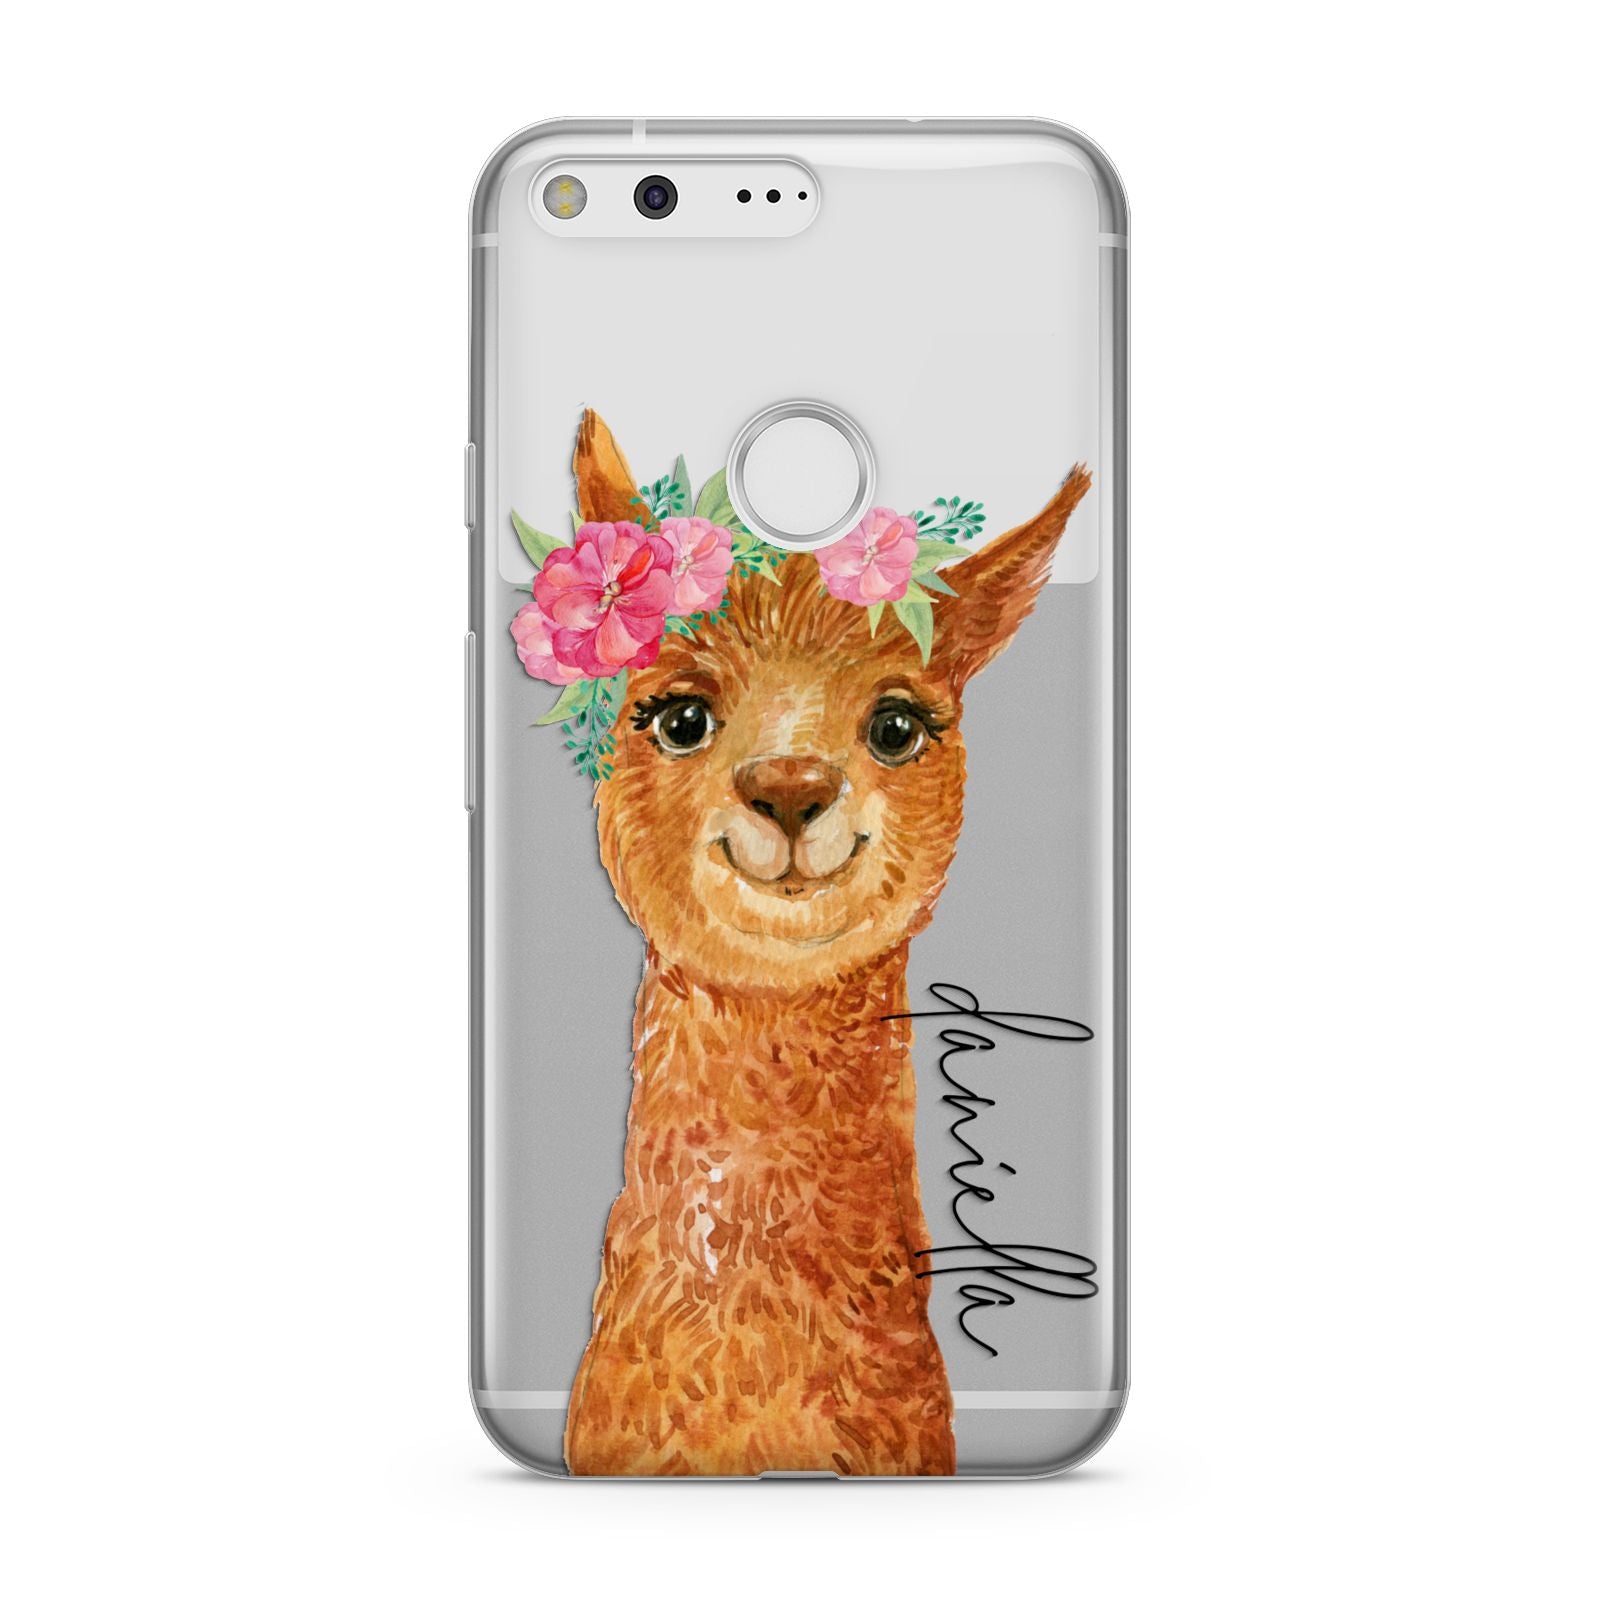 Personalised Llama Google Pixel Case